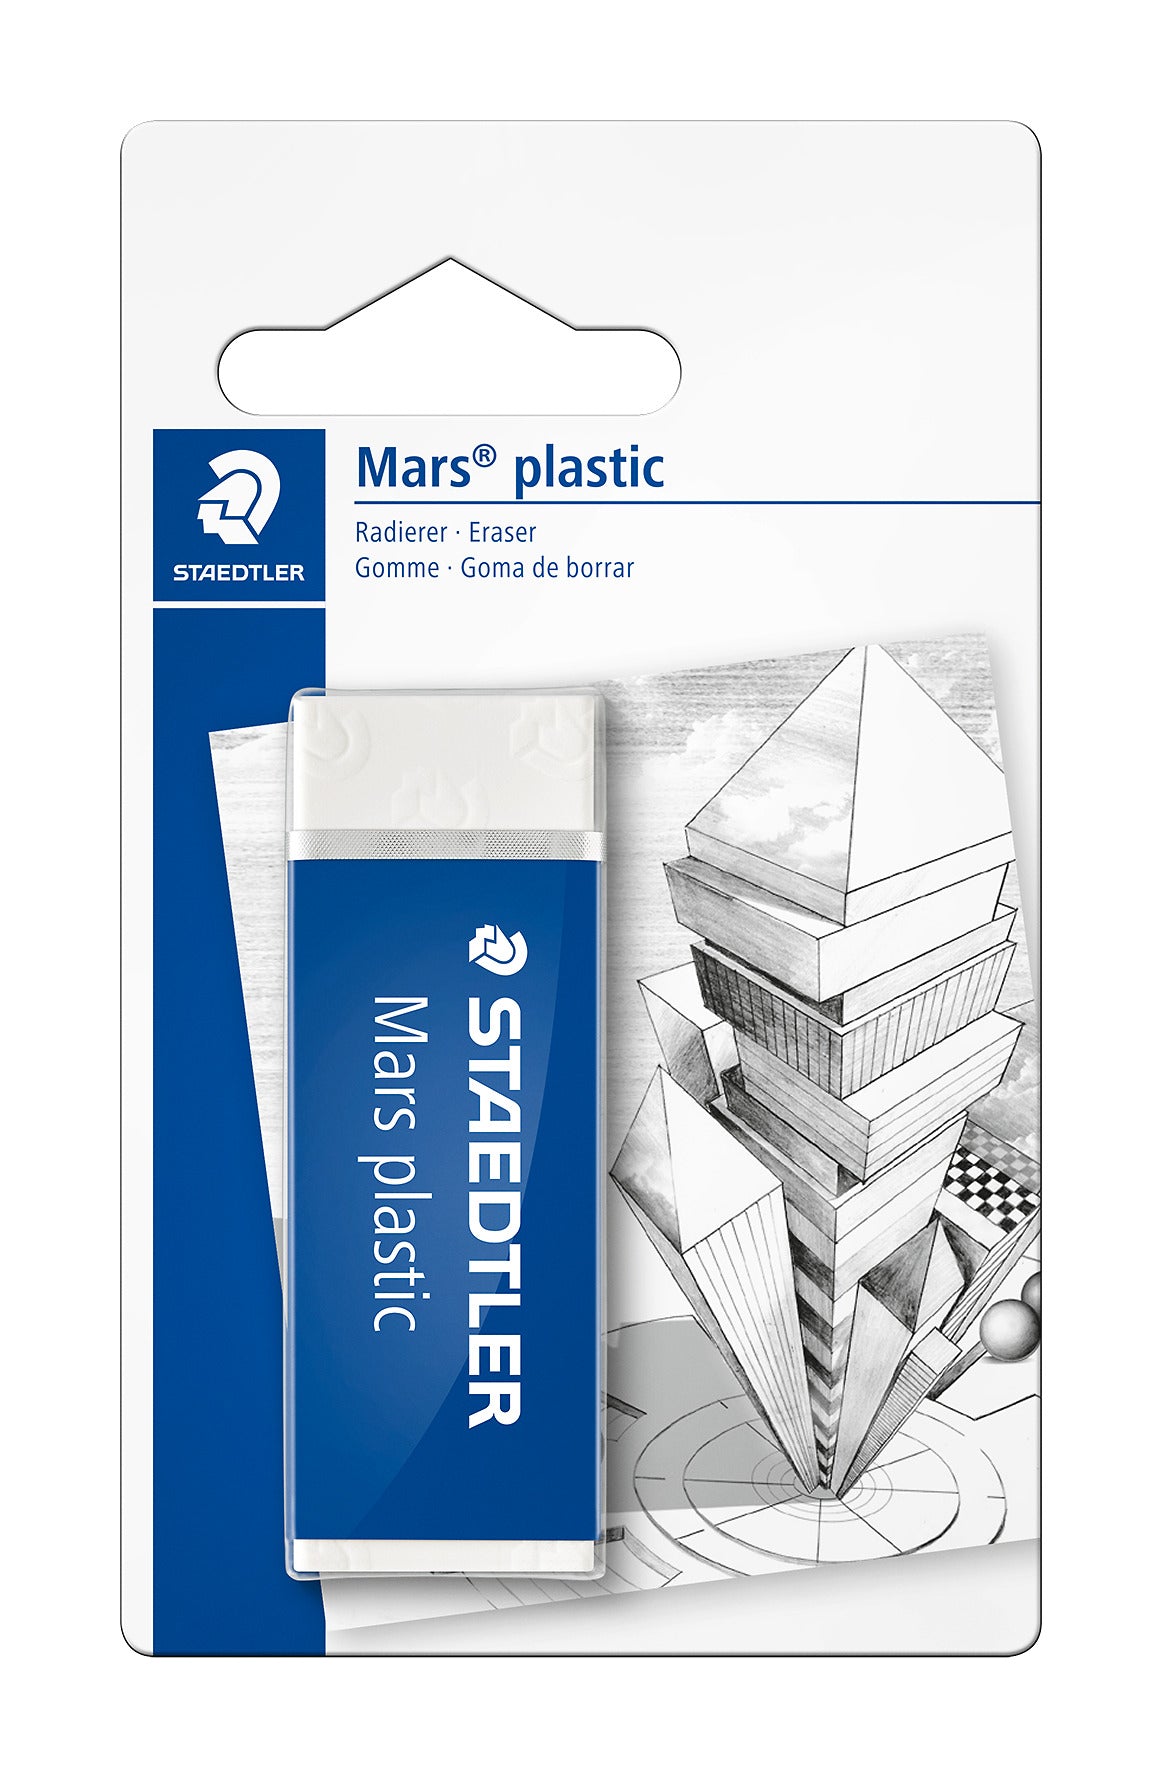 Staedtler Mars - Plastic Premium Gomme - Blanc - Paquet de 2